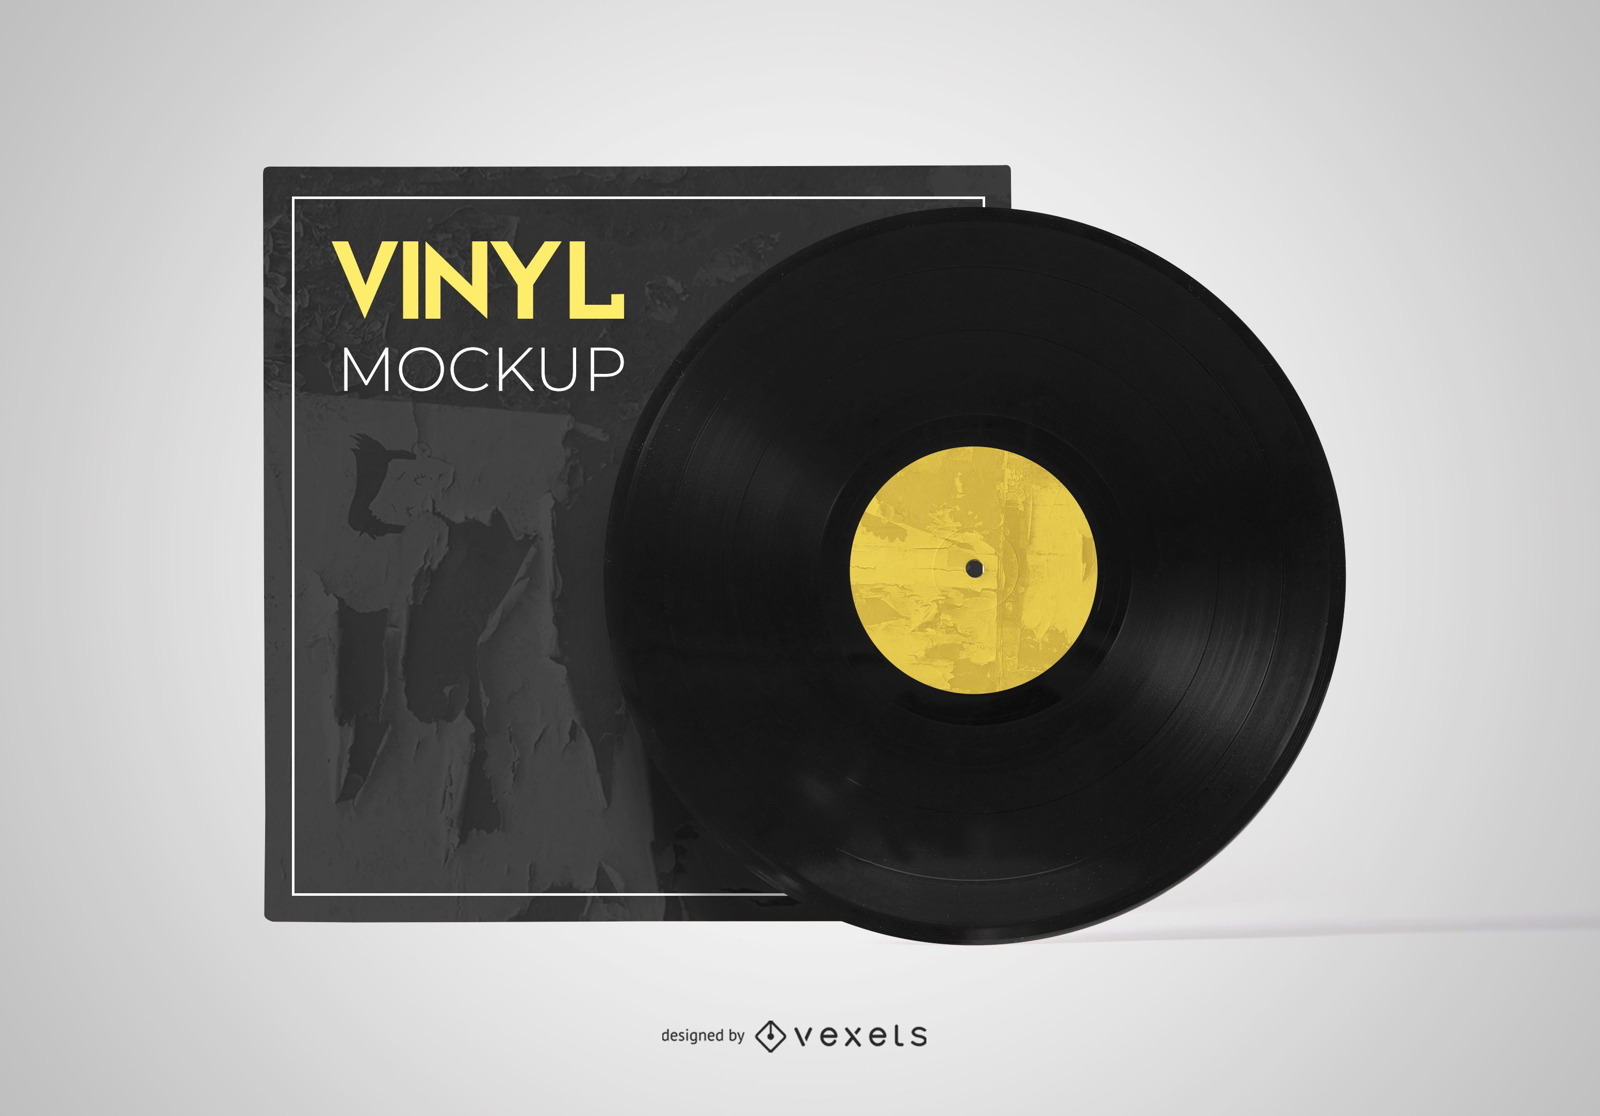 Vinyl Sleeve Record Mockup Design PSD Editable Template